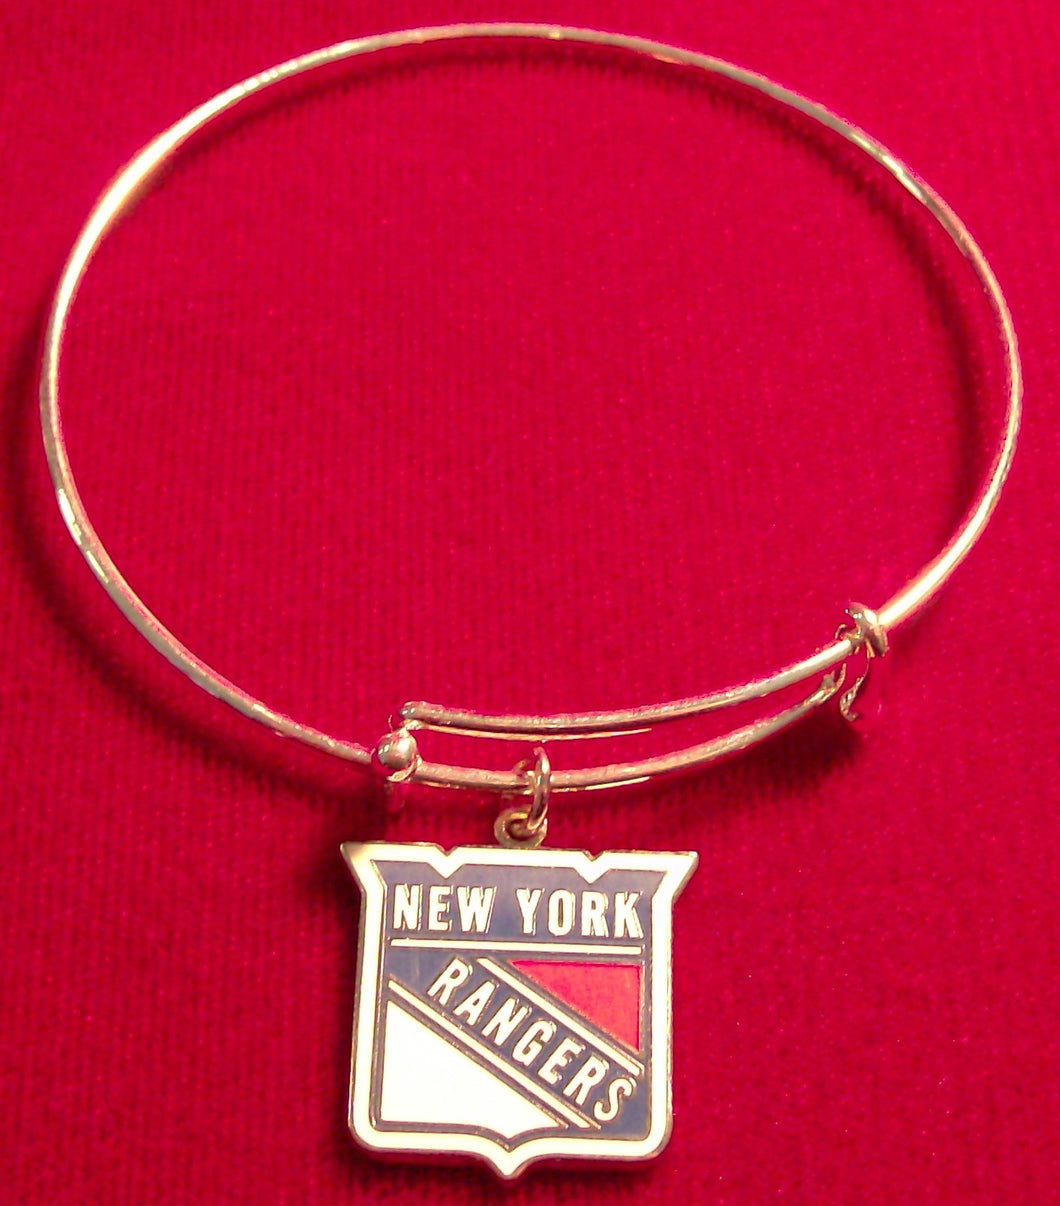 Pro Sports Expandable Wire Bangle Bracelets, New York Rangers